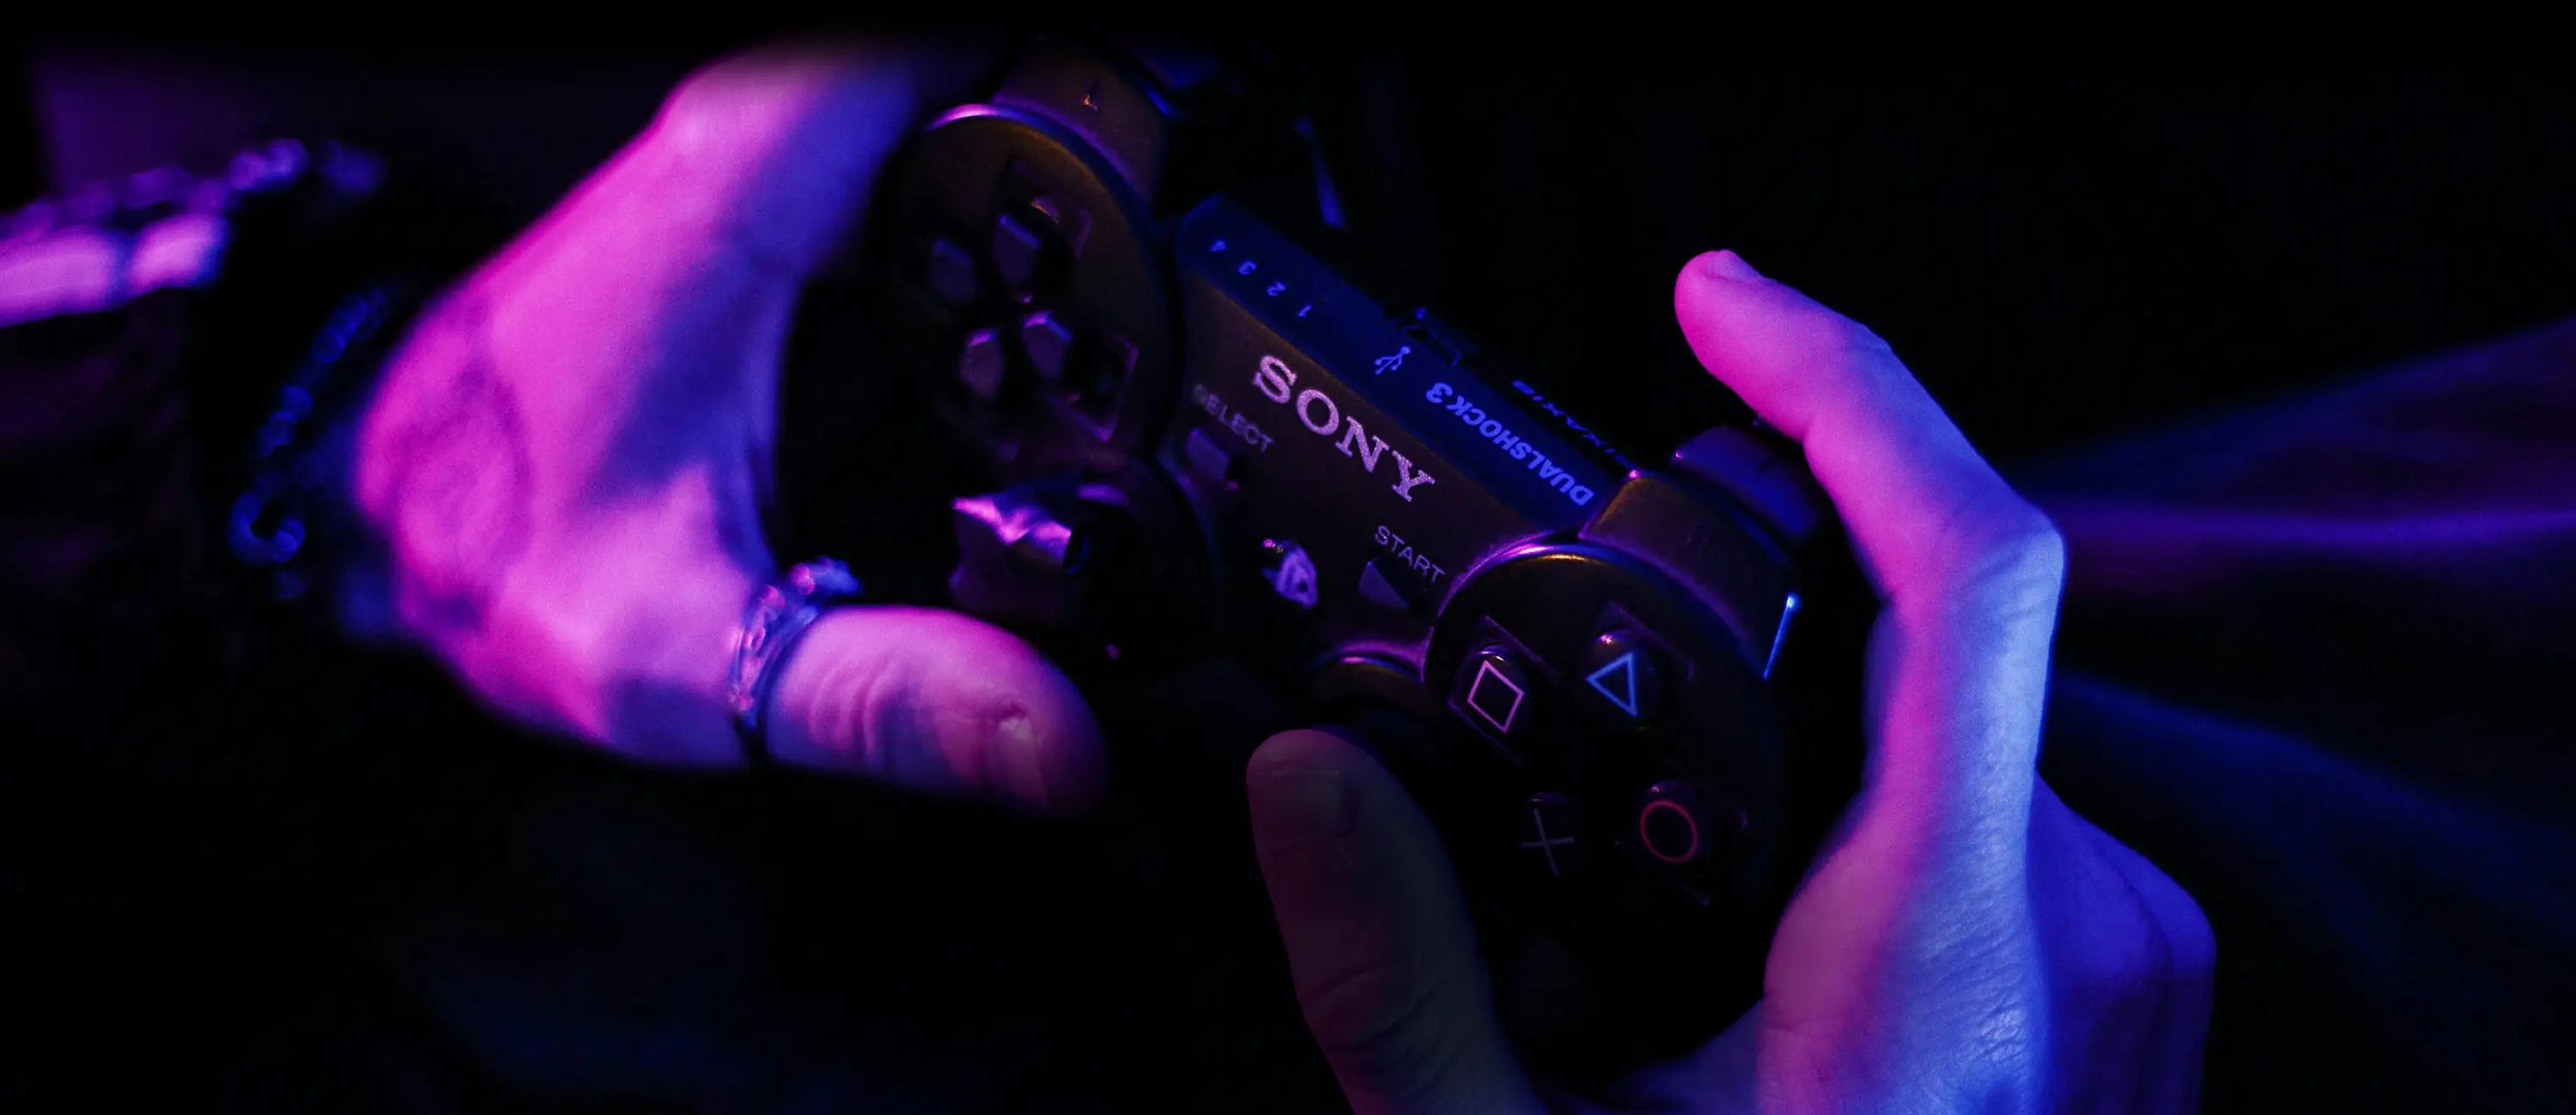 A man plays playstation 2 using a controller, close up